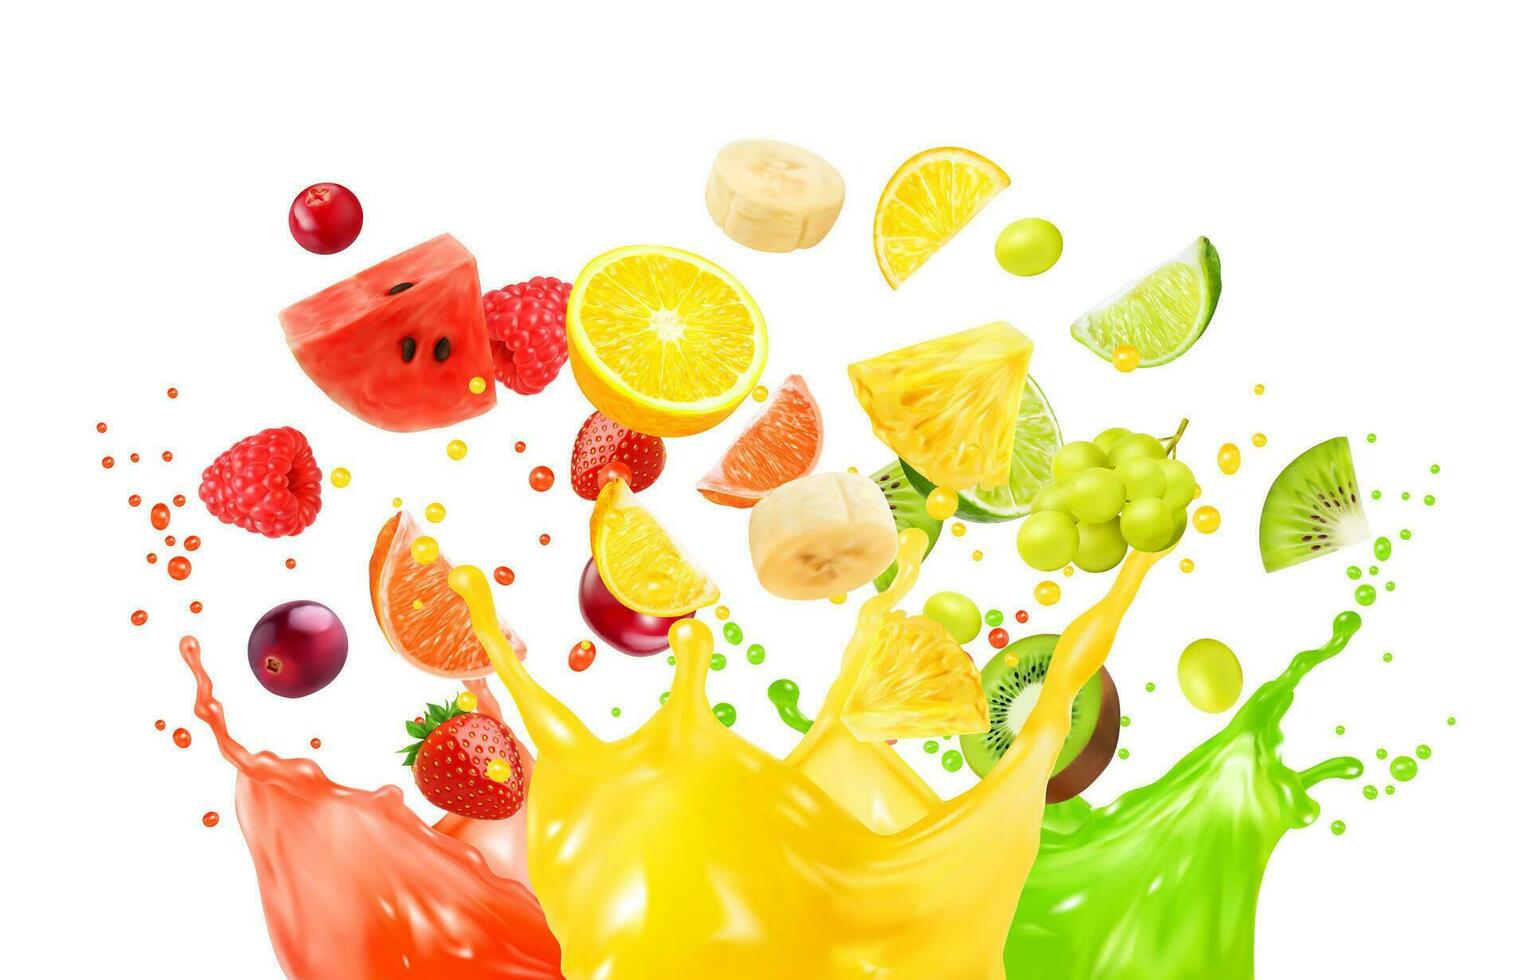 Juice fruit mix splash, vibrant fruity eruption vector